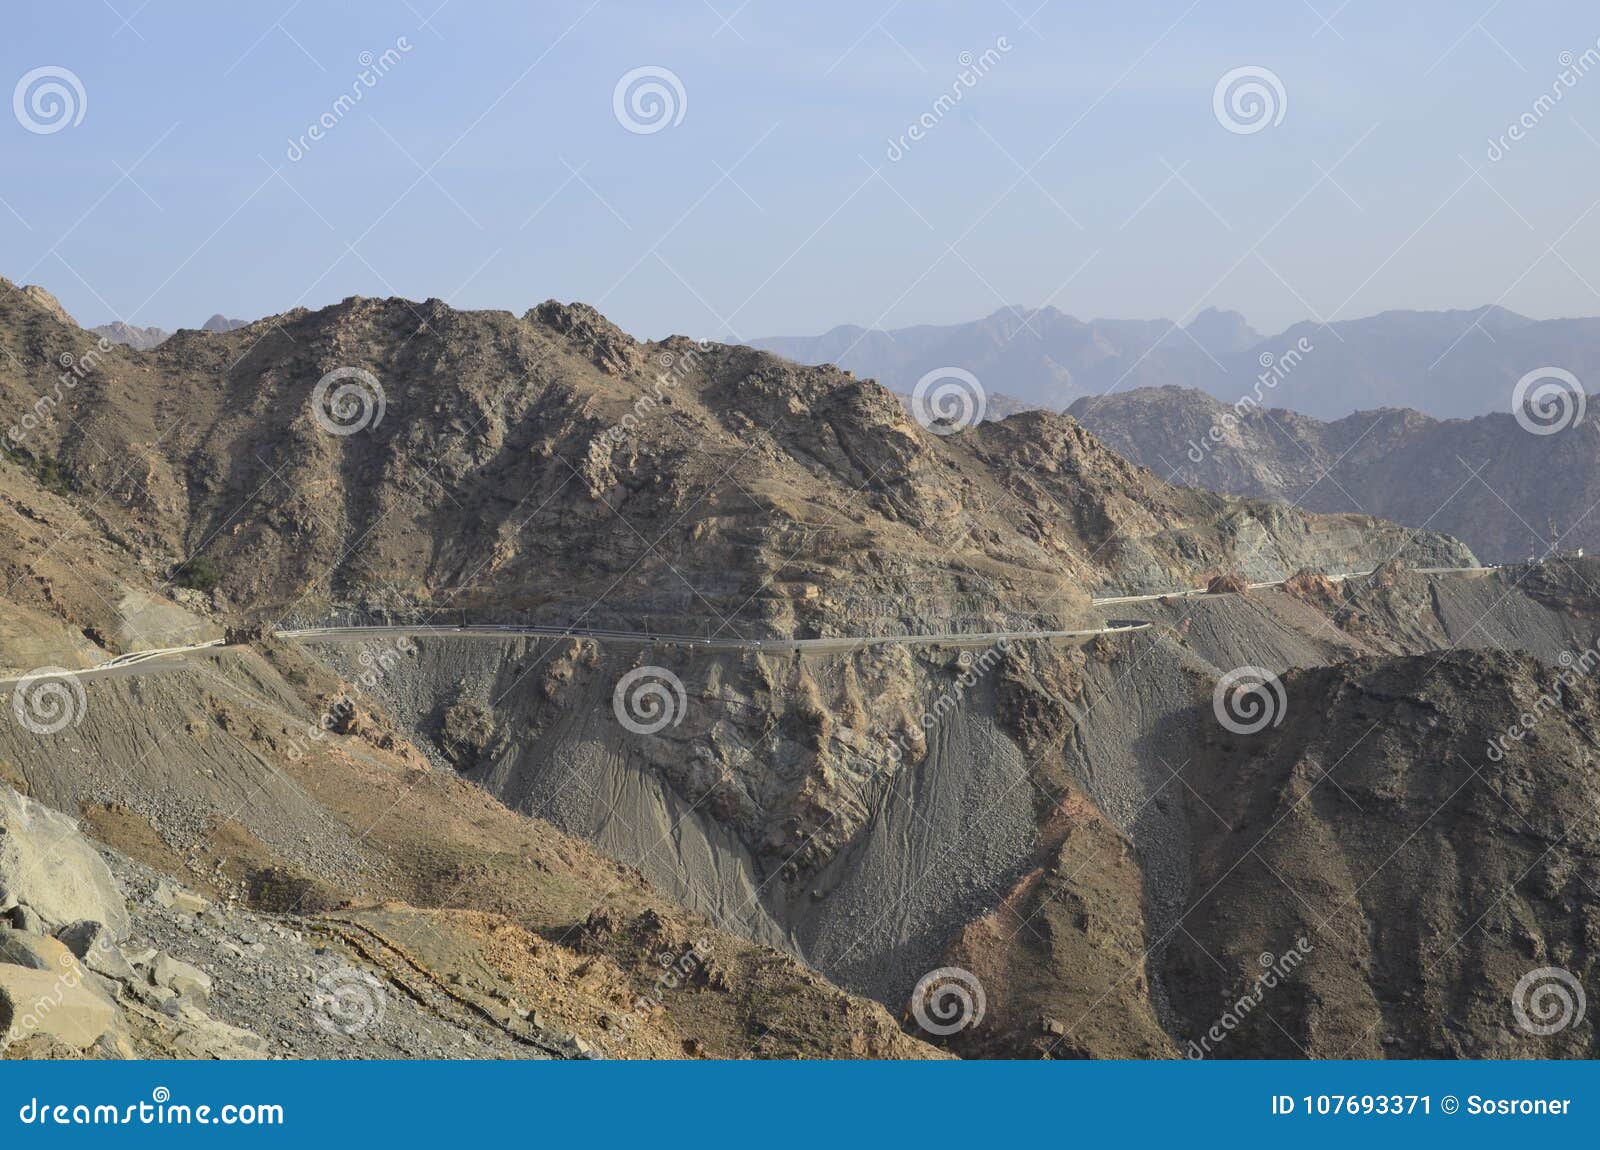 al hada mountain, al hada-taif road, saudi arabia